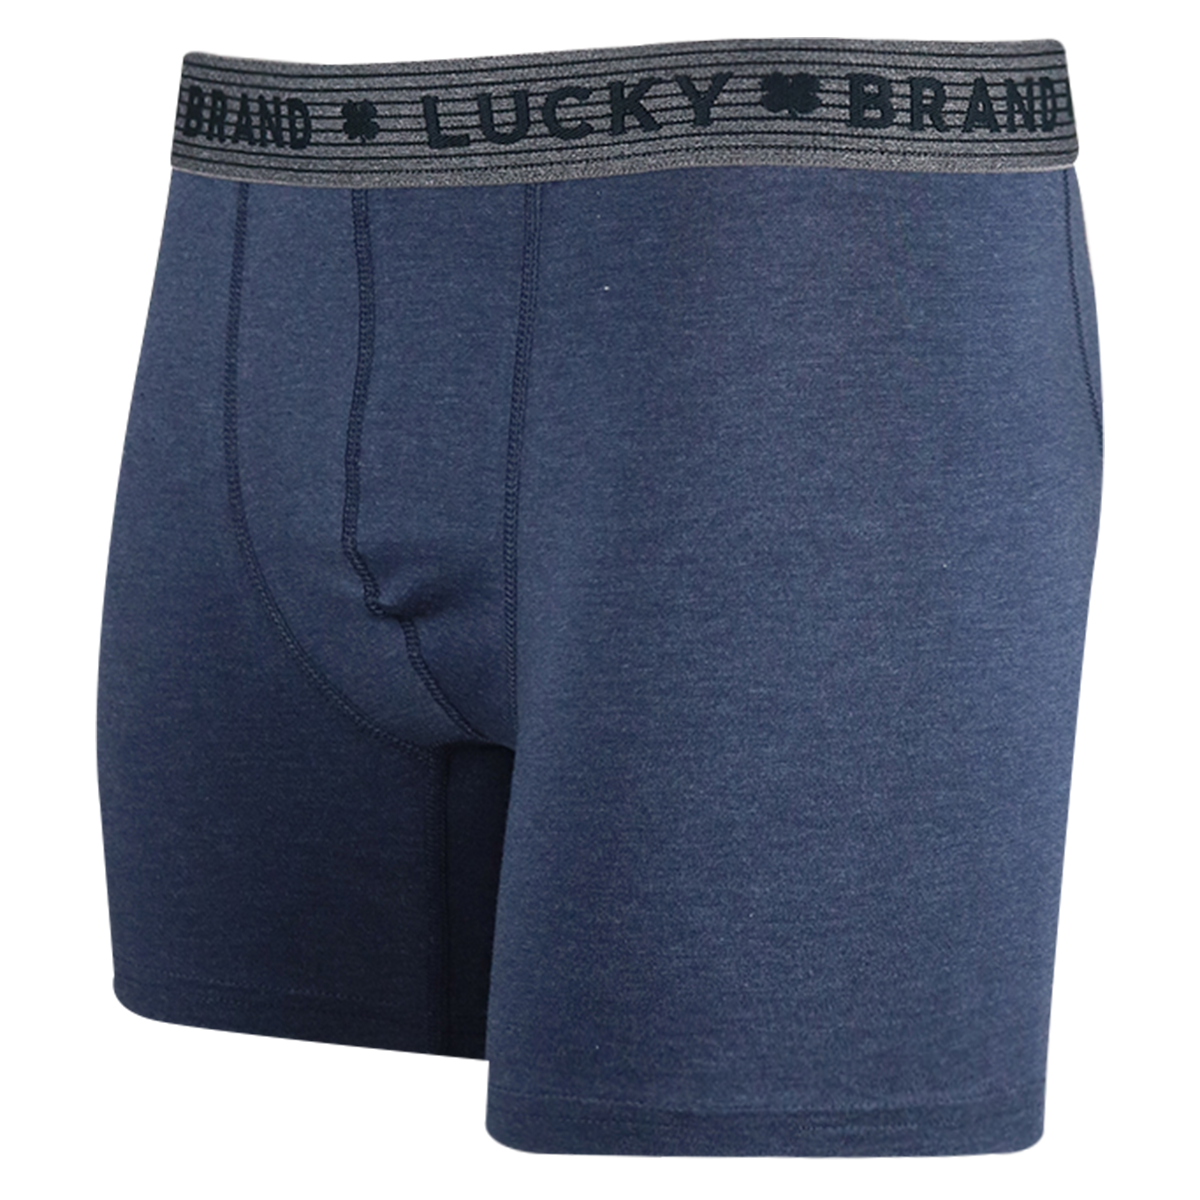 Lucky Brand Men's Dark Grey Multicolor Waistband 4 Pack Boxer